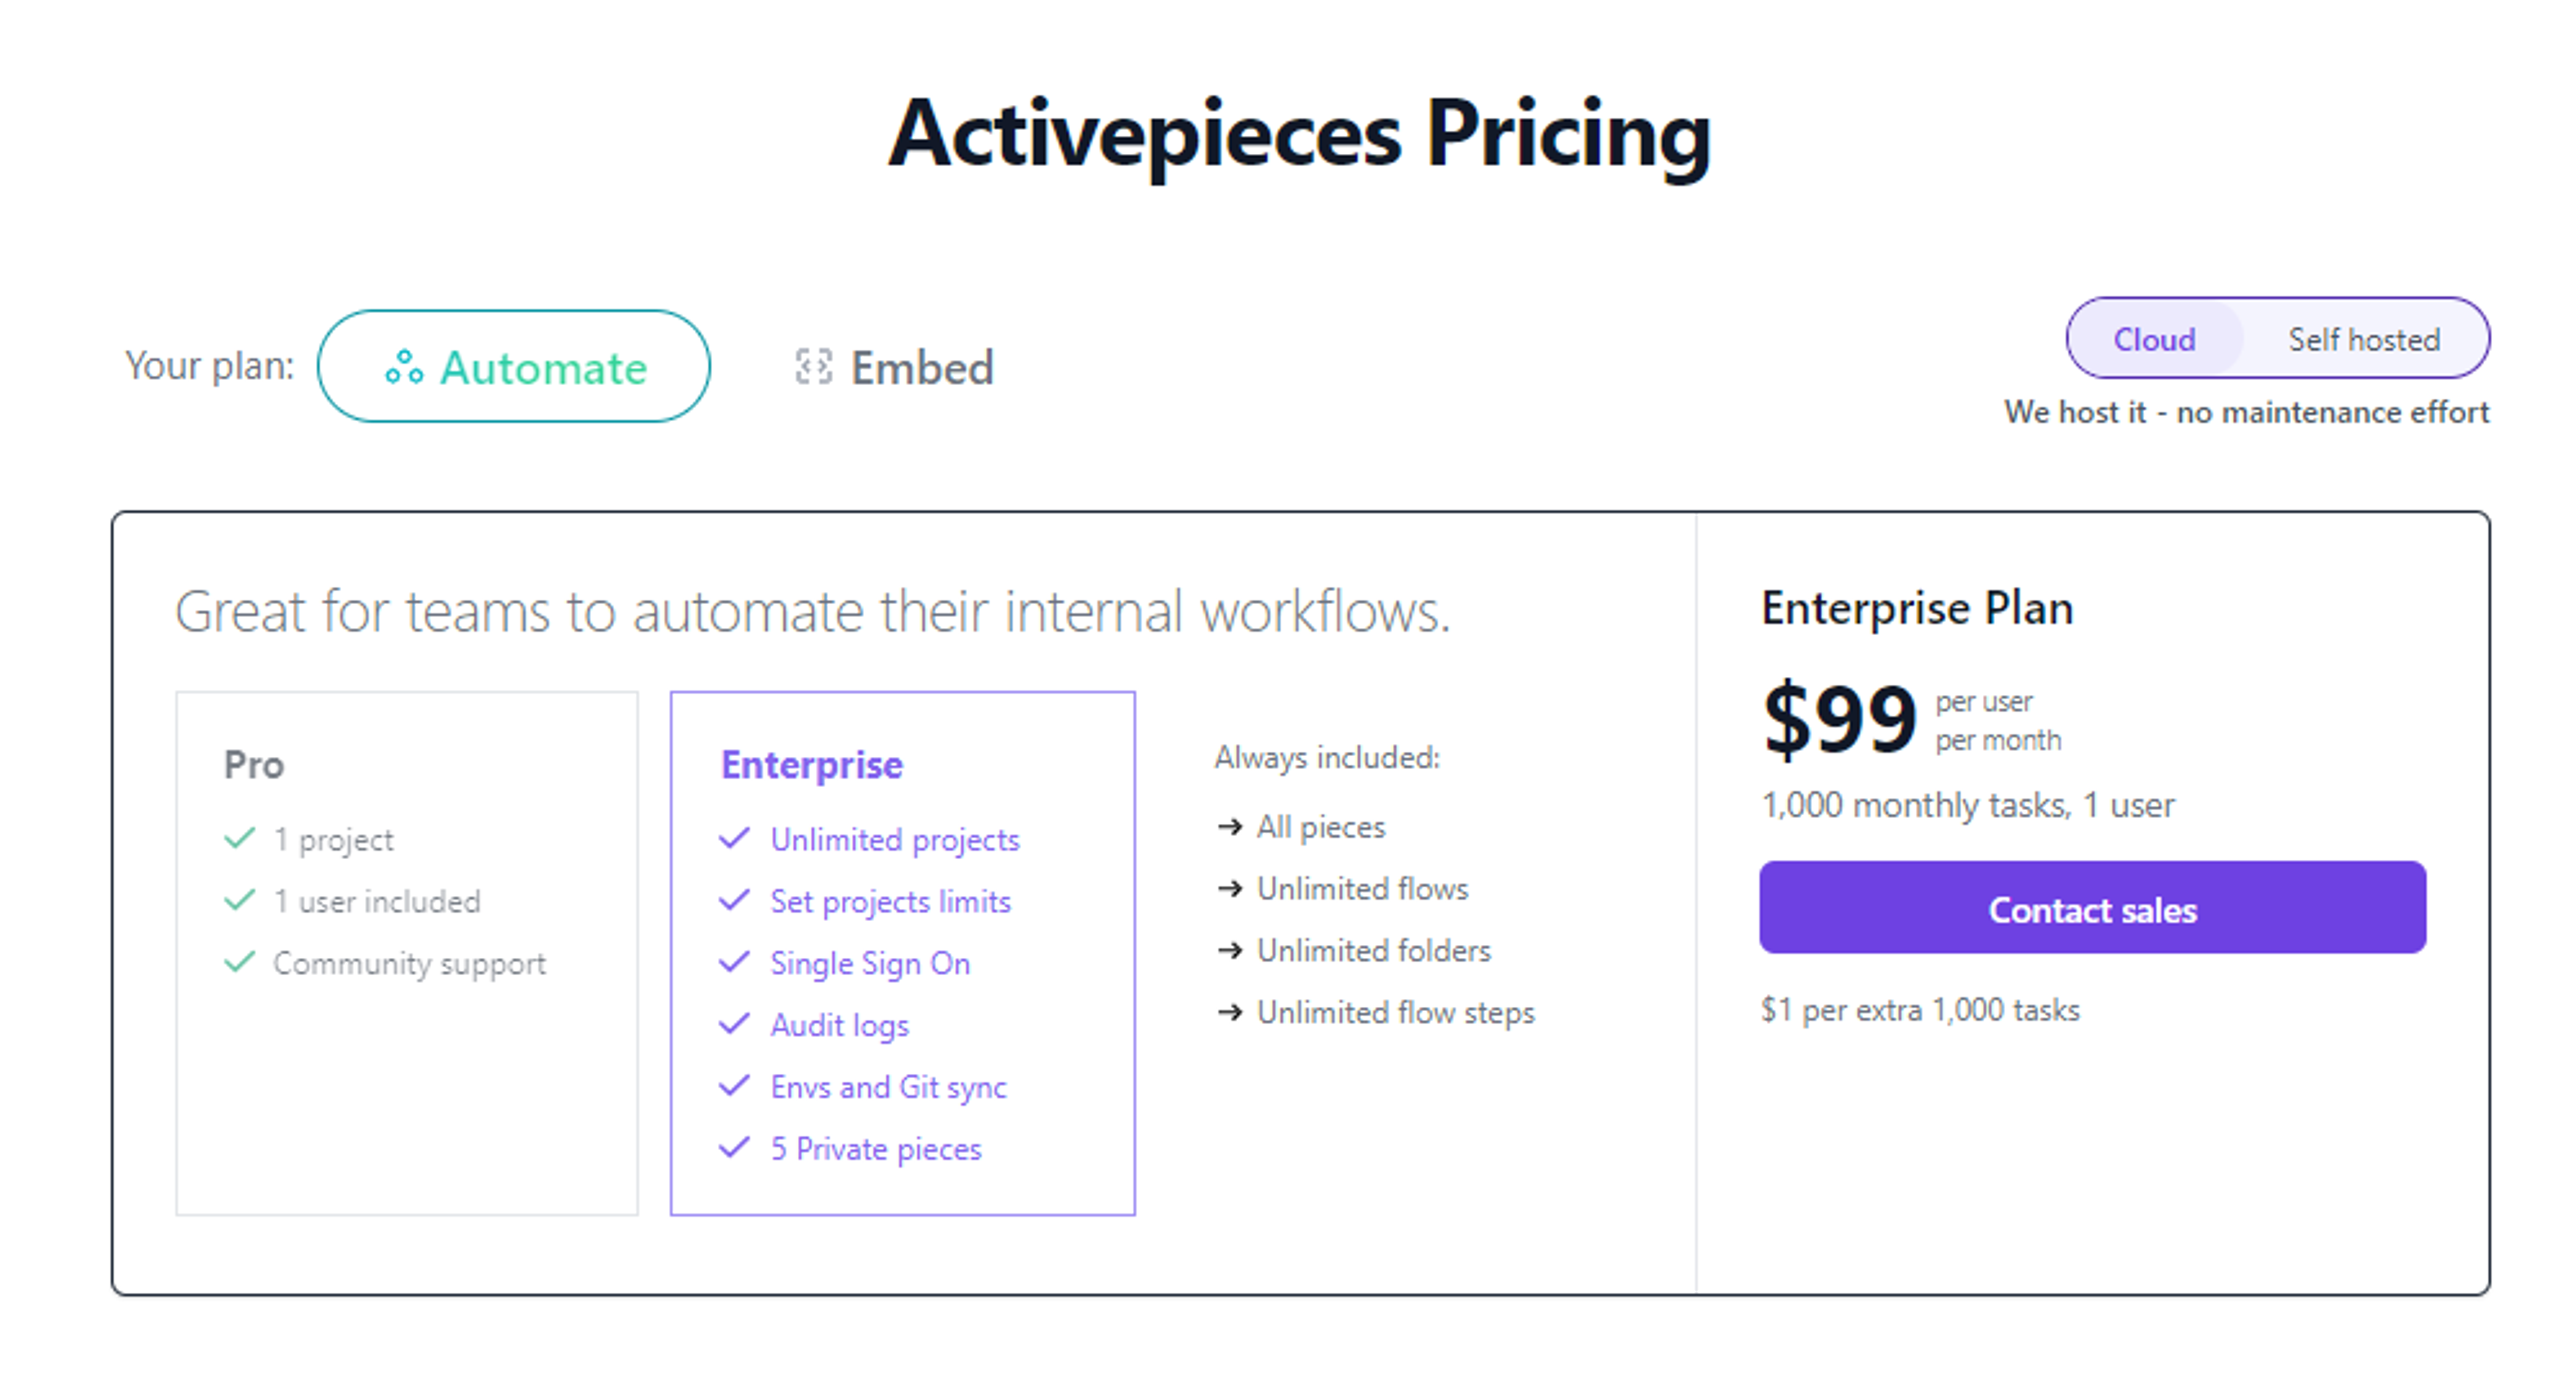 Active pieces pricing